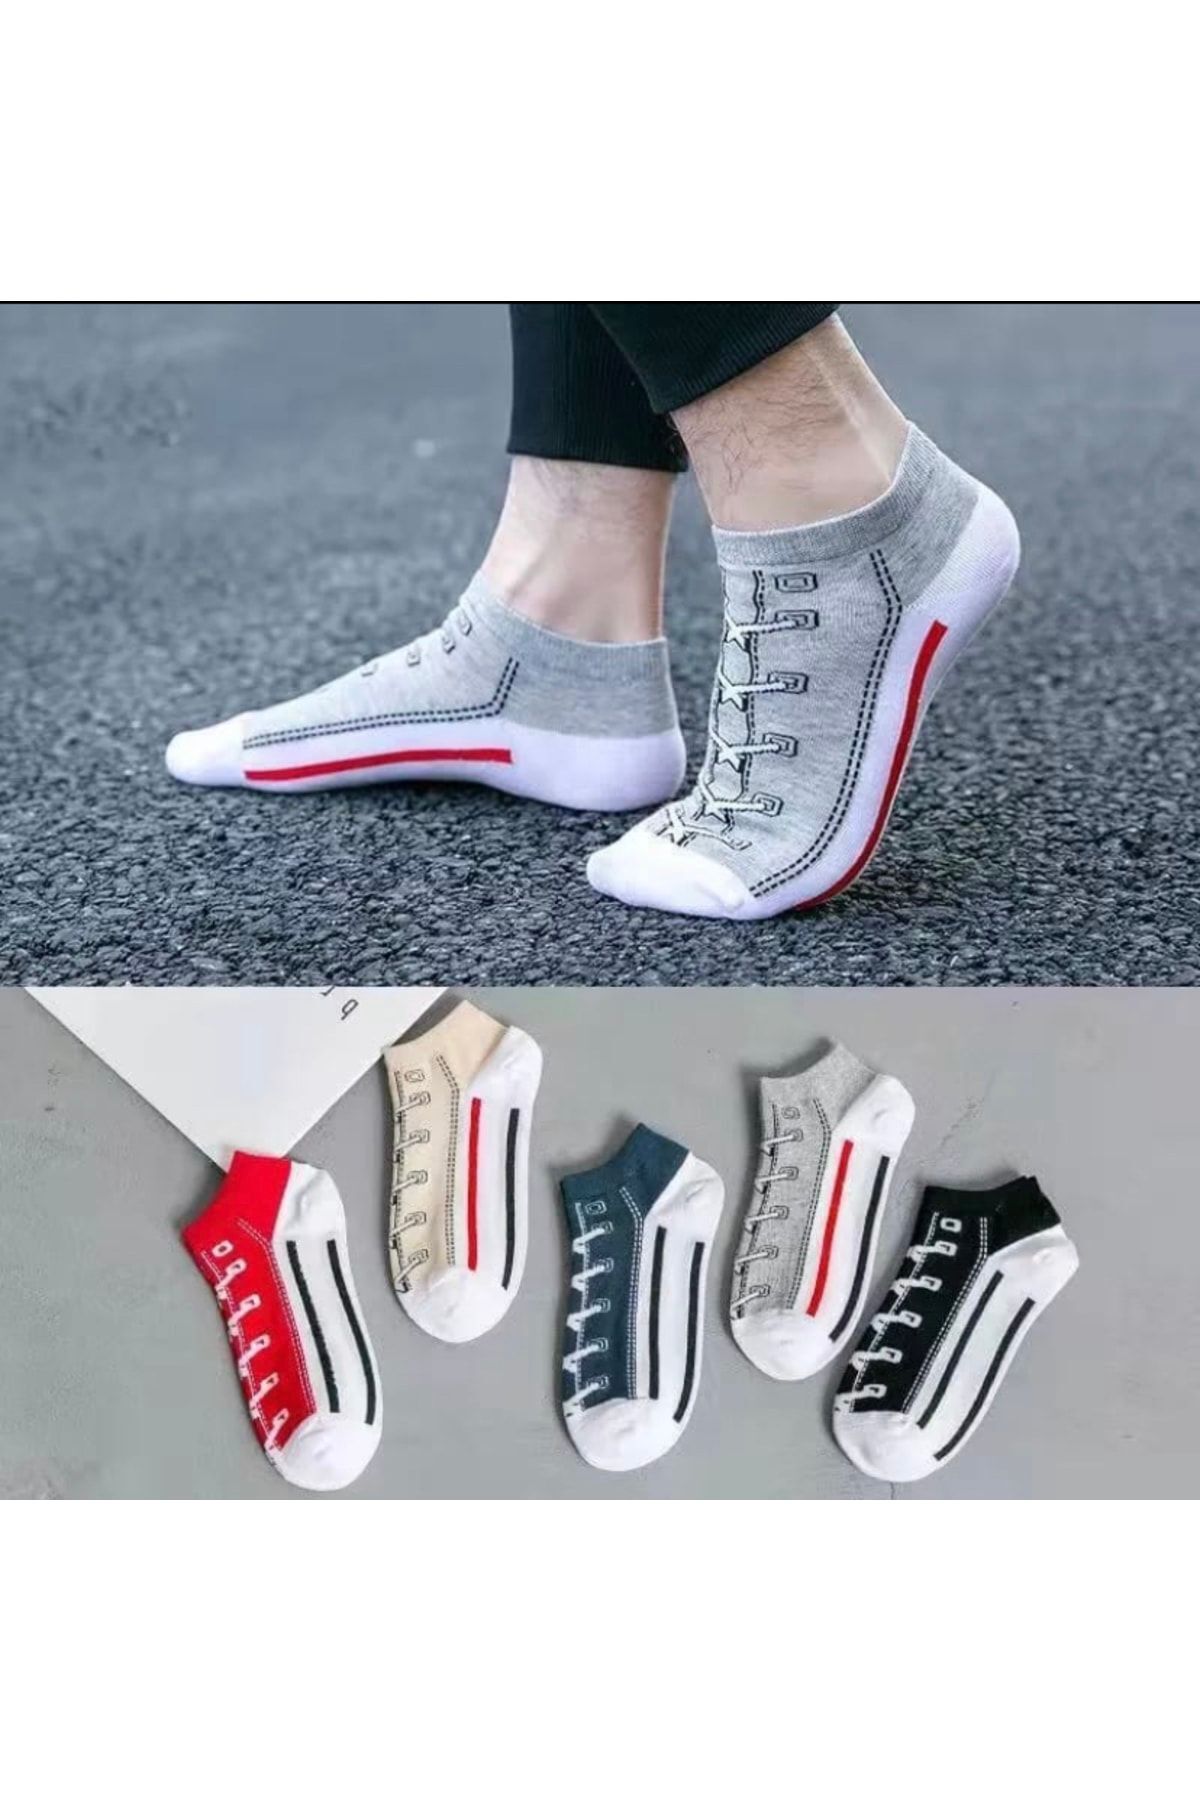 dm del more 5 Çift Unisex Renkli Yıkamalı Converse Model Patik Çorap Seti